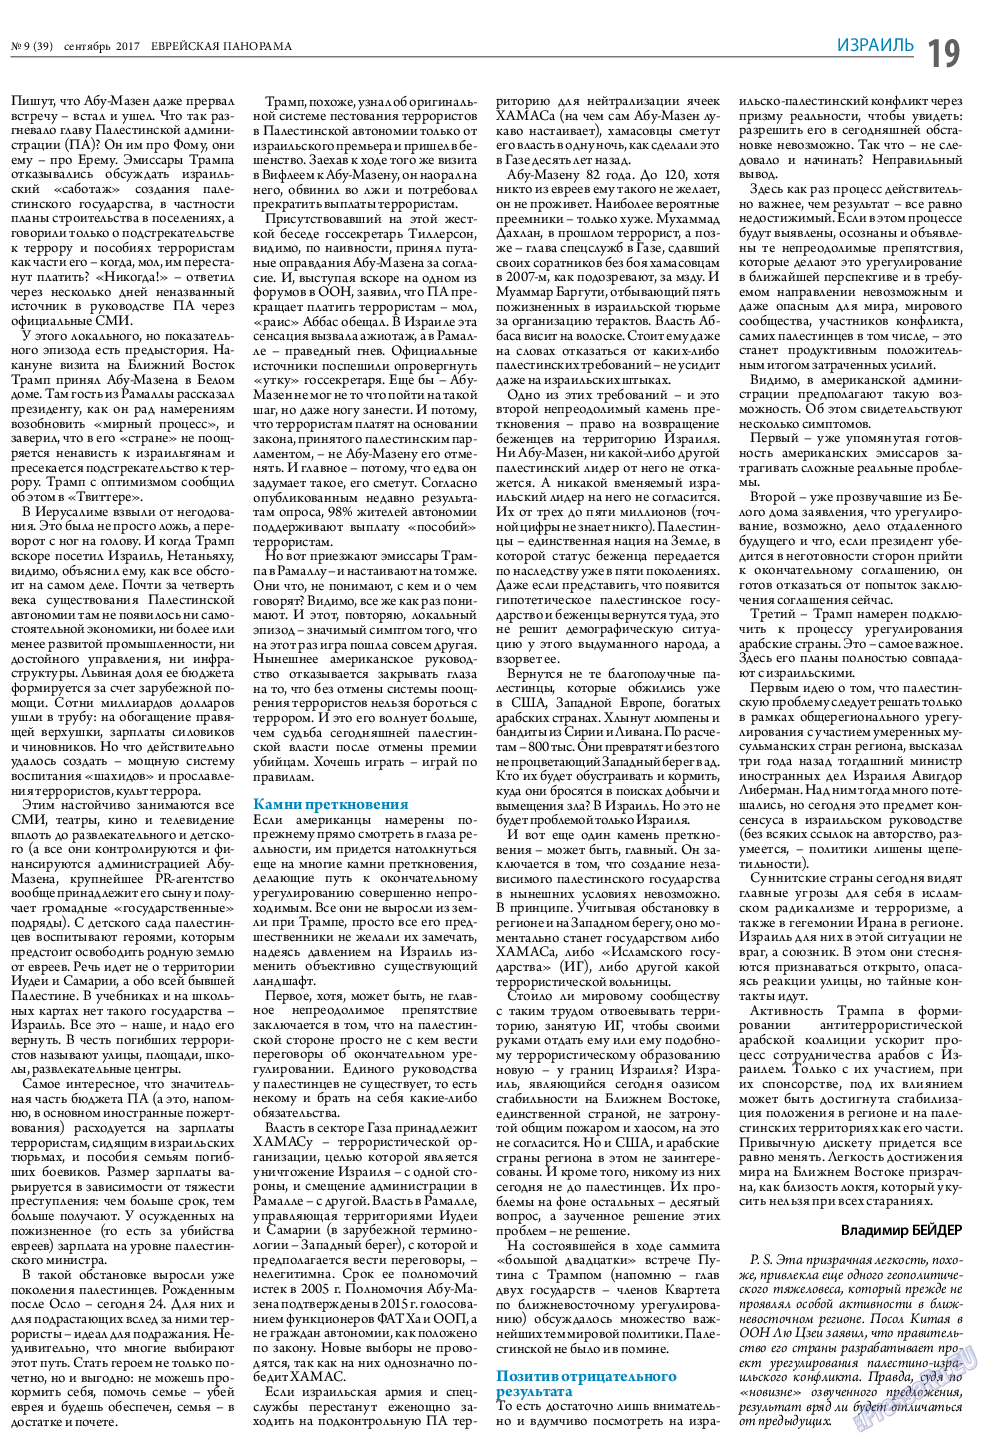 Еврейская панорама, газета. 2017 №9 стр.19